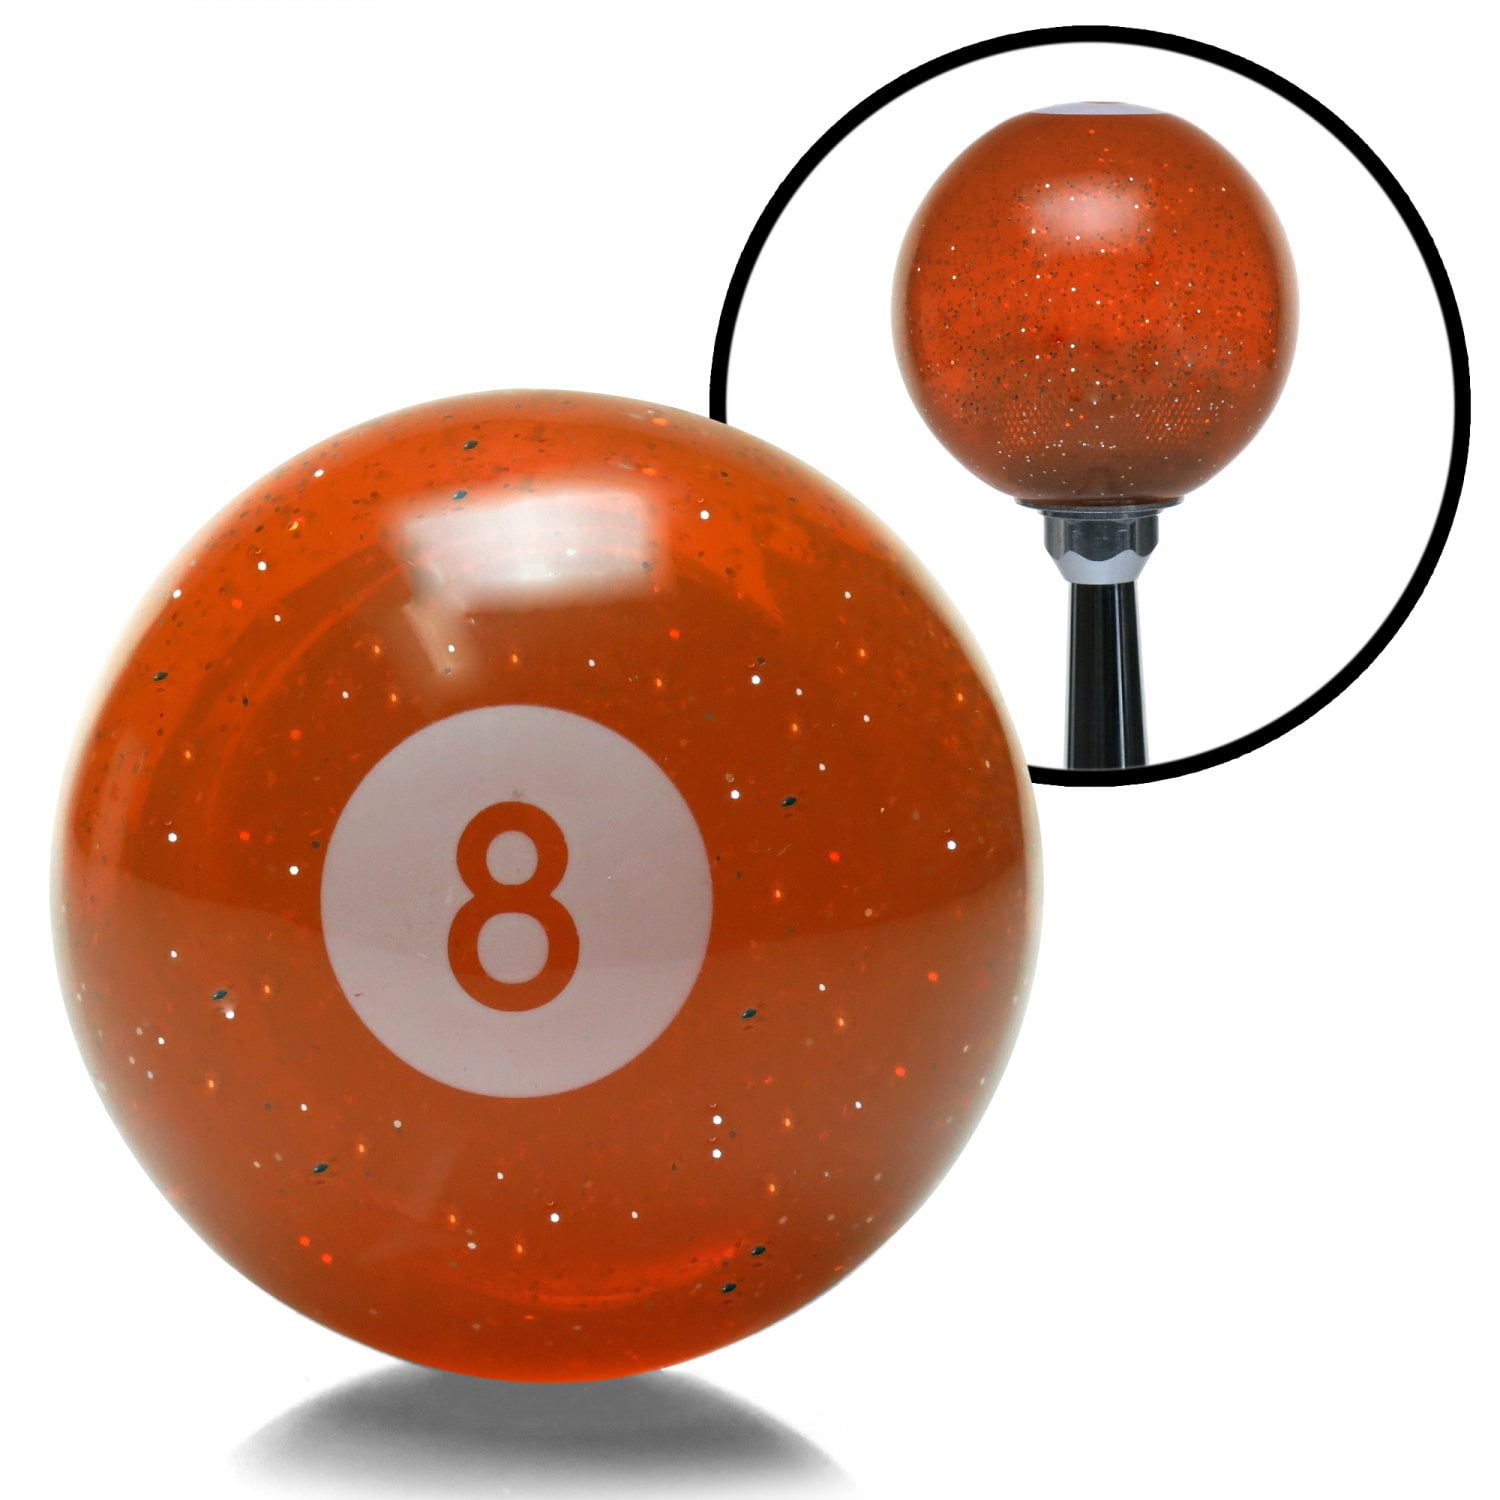  Orange  8 Ball Custom Shift  Knob  Translucent with Metal 